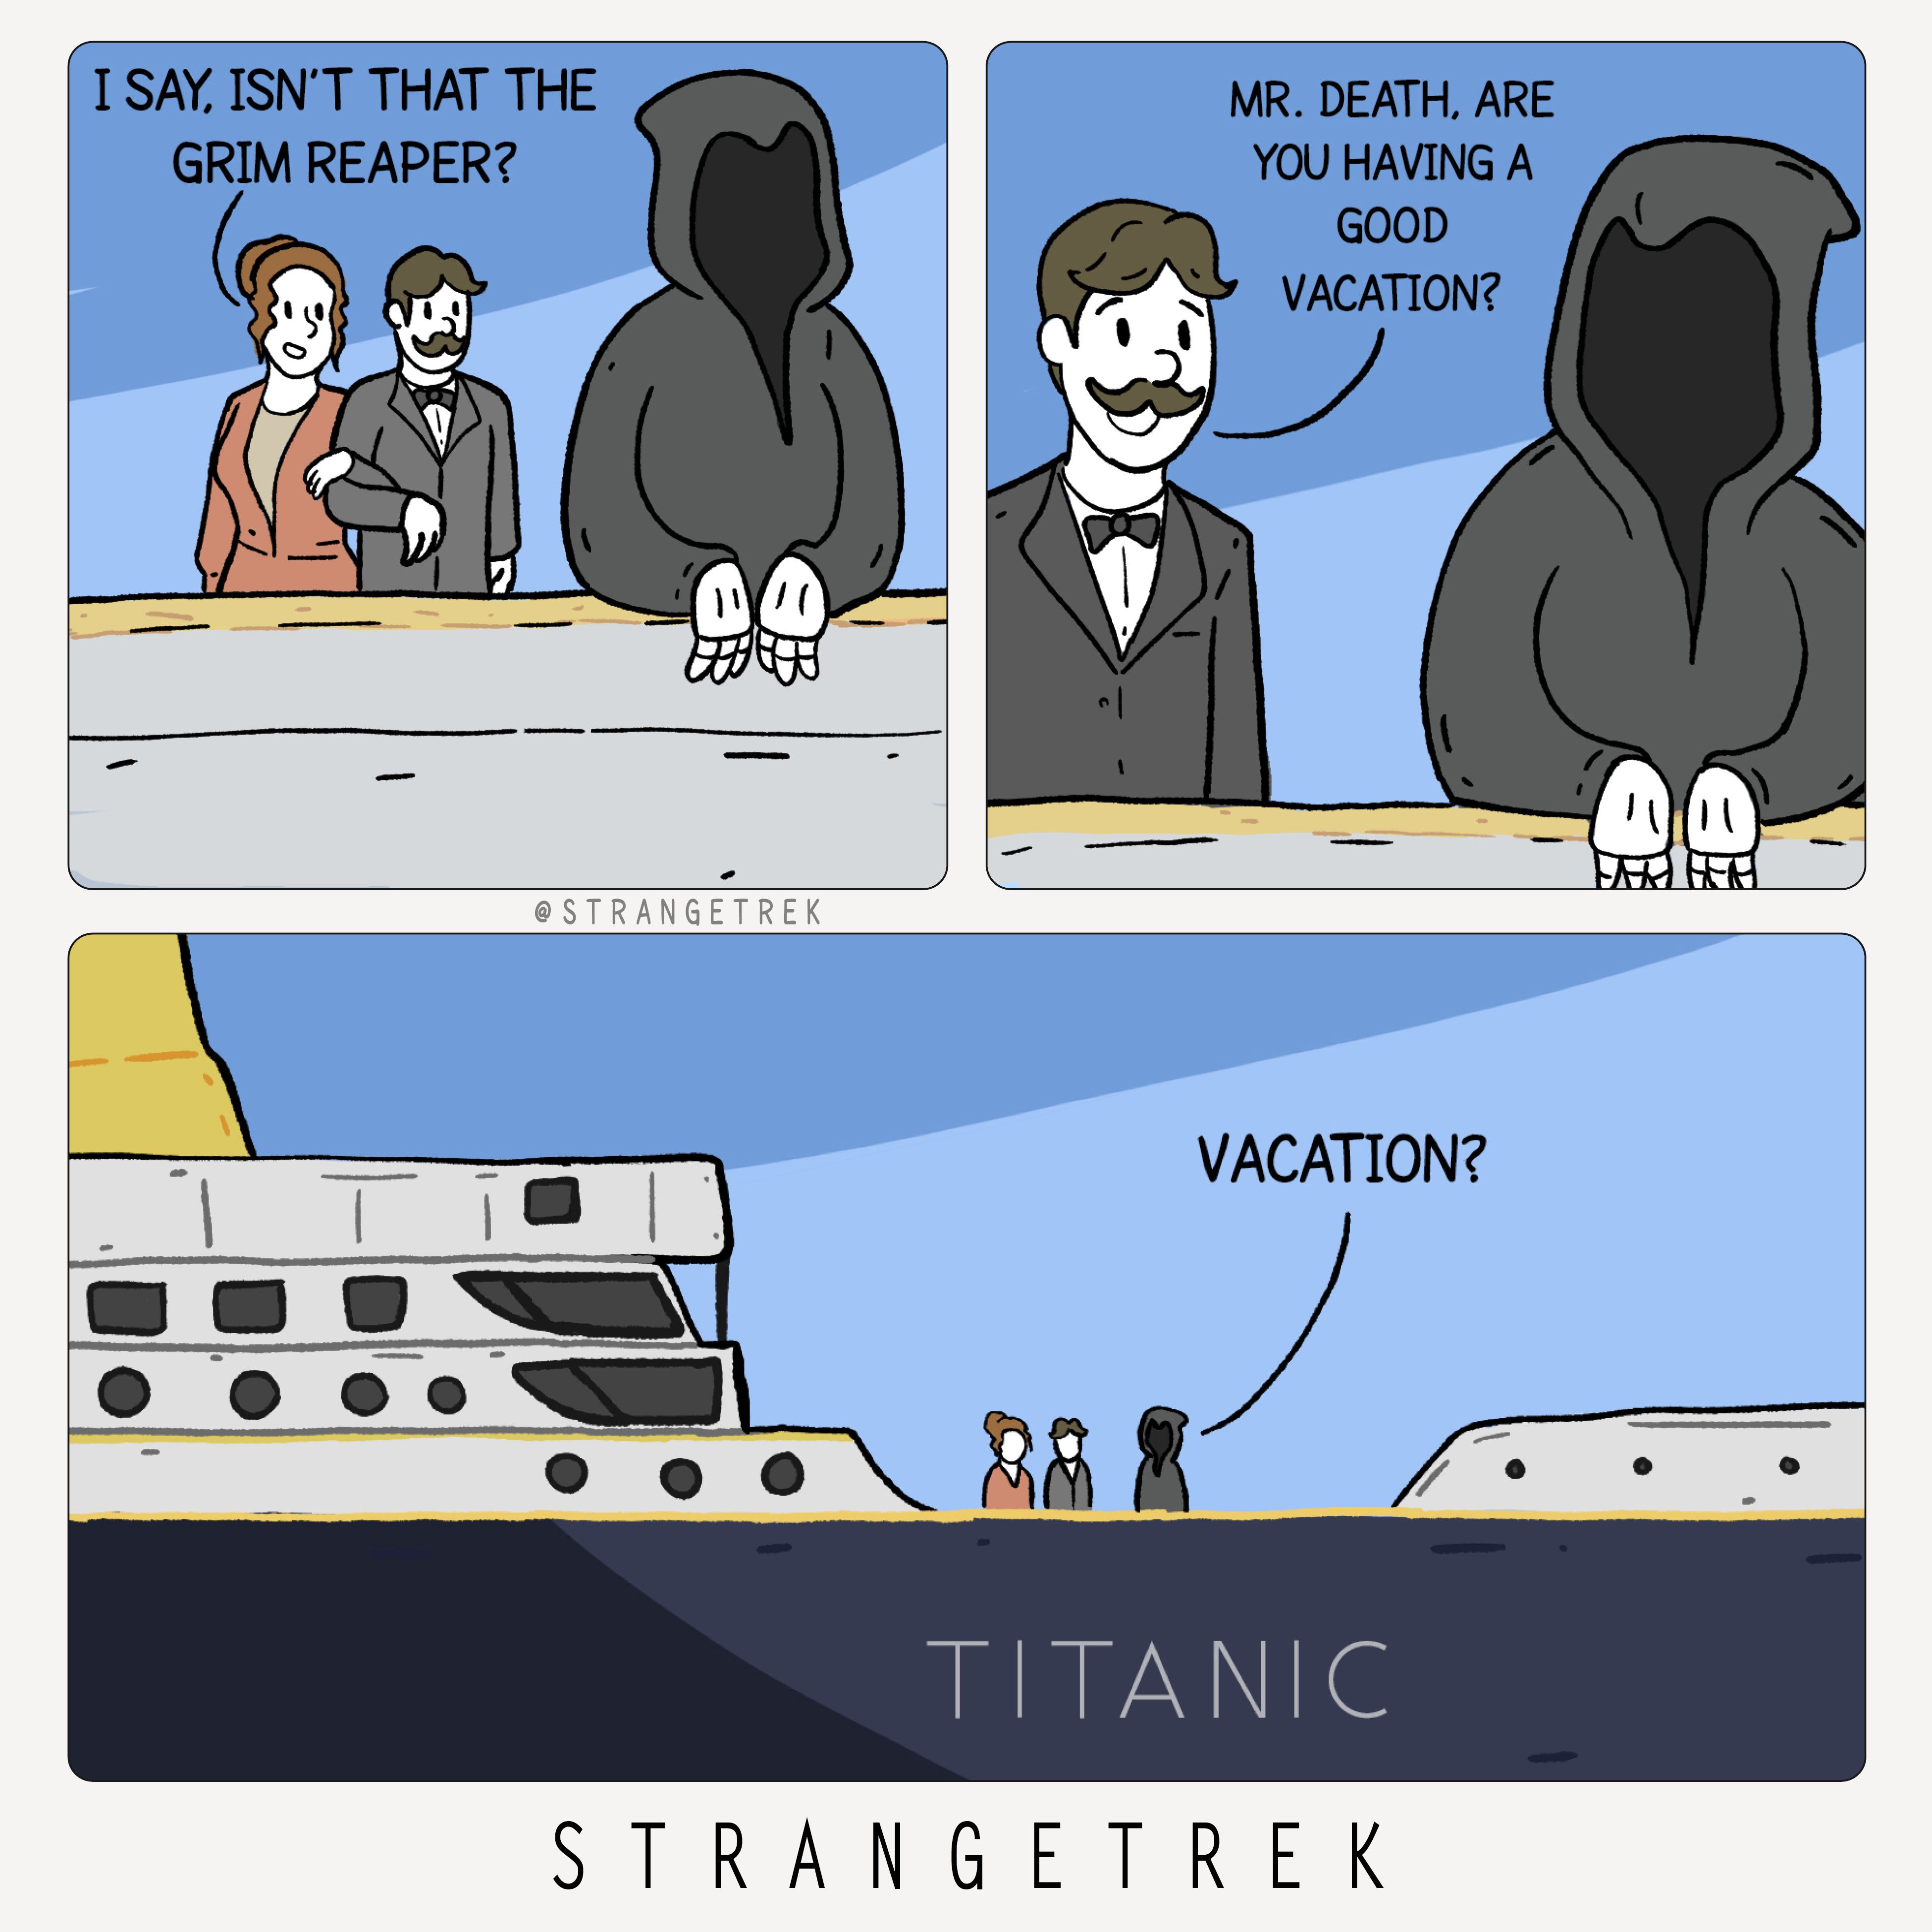 Vacation?